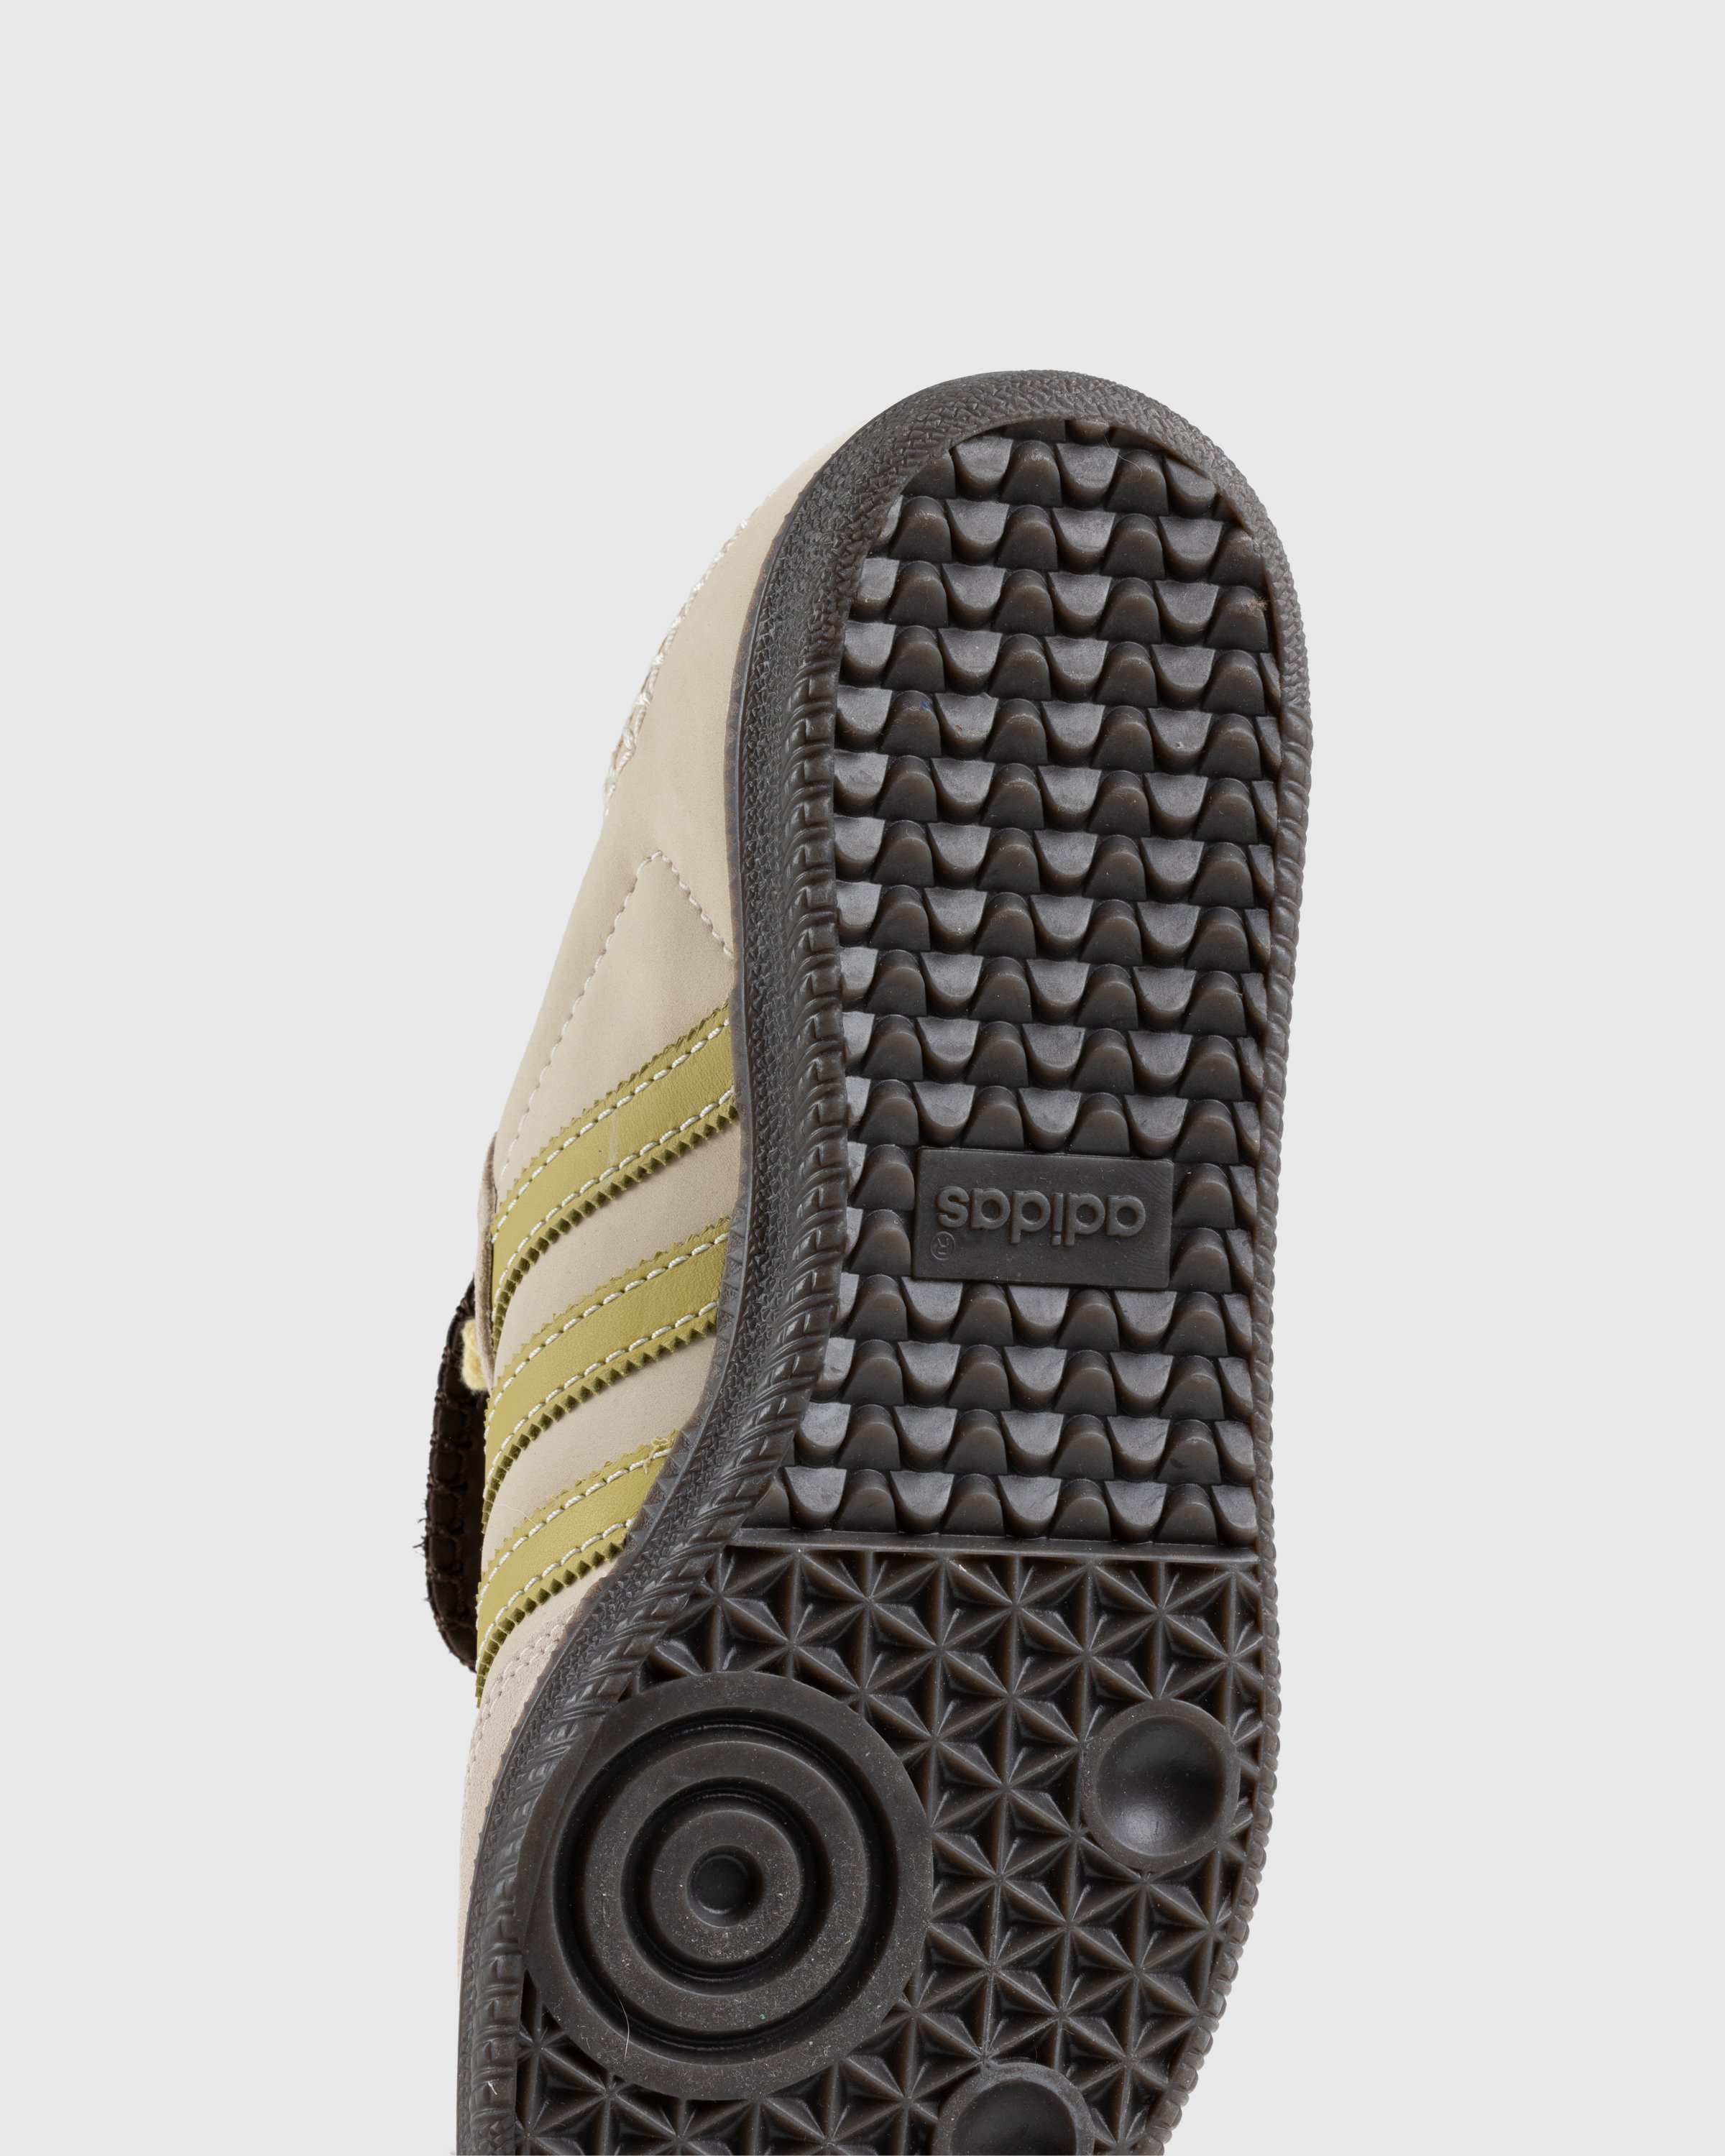 Adidas x Wales Bonner - Samba Nubuck Ecru Tint/Almost Yellow/Dark Brown - Footwear - Beige - Image 6